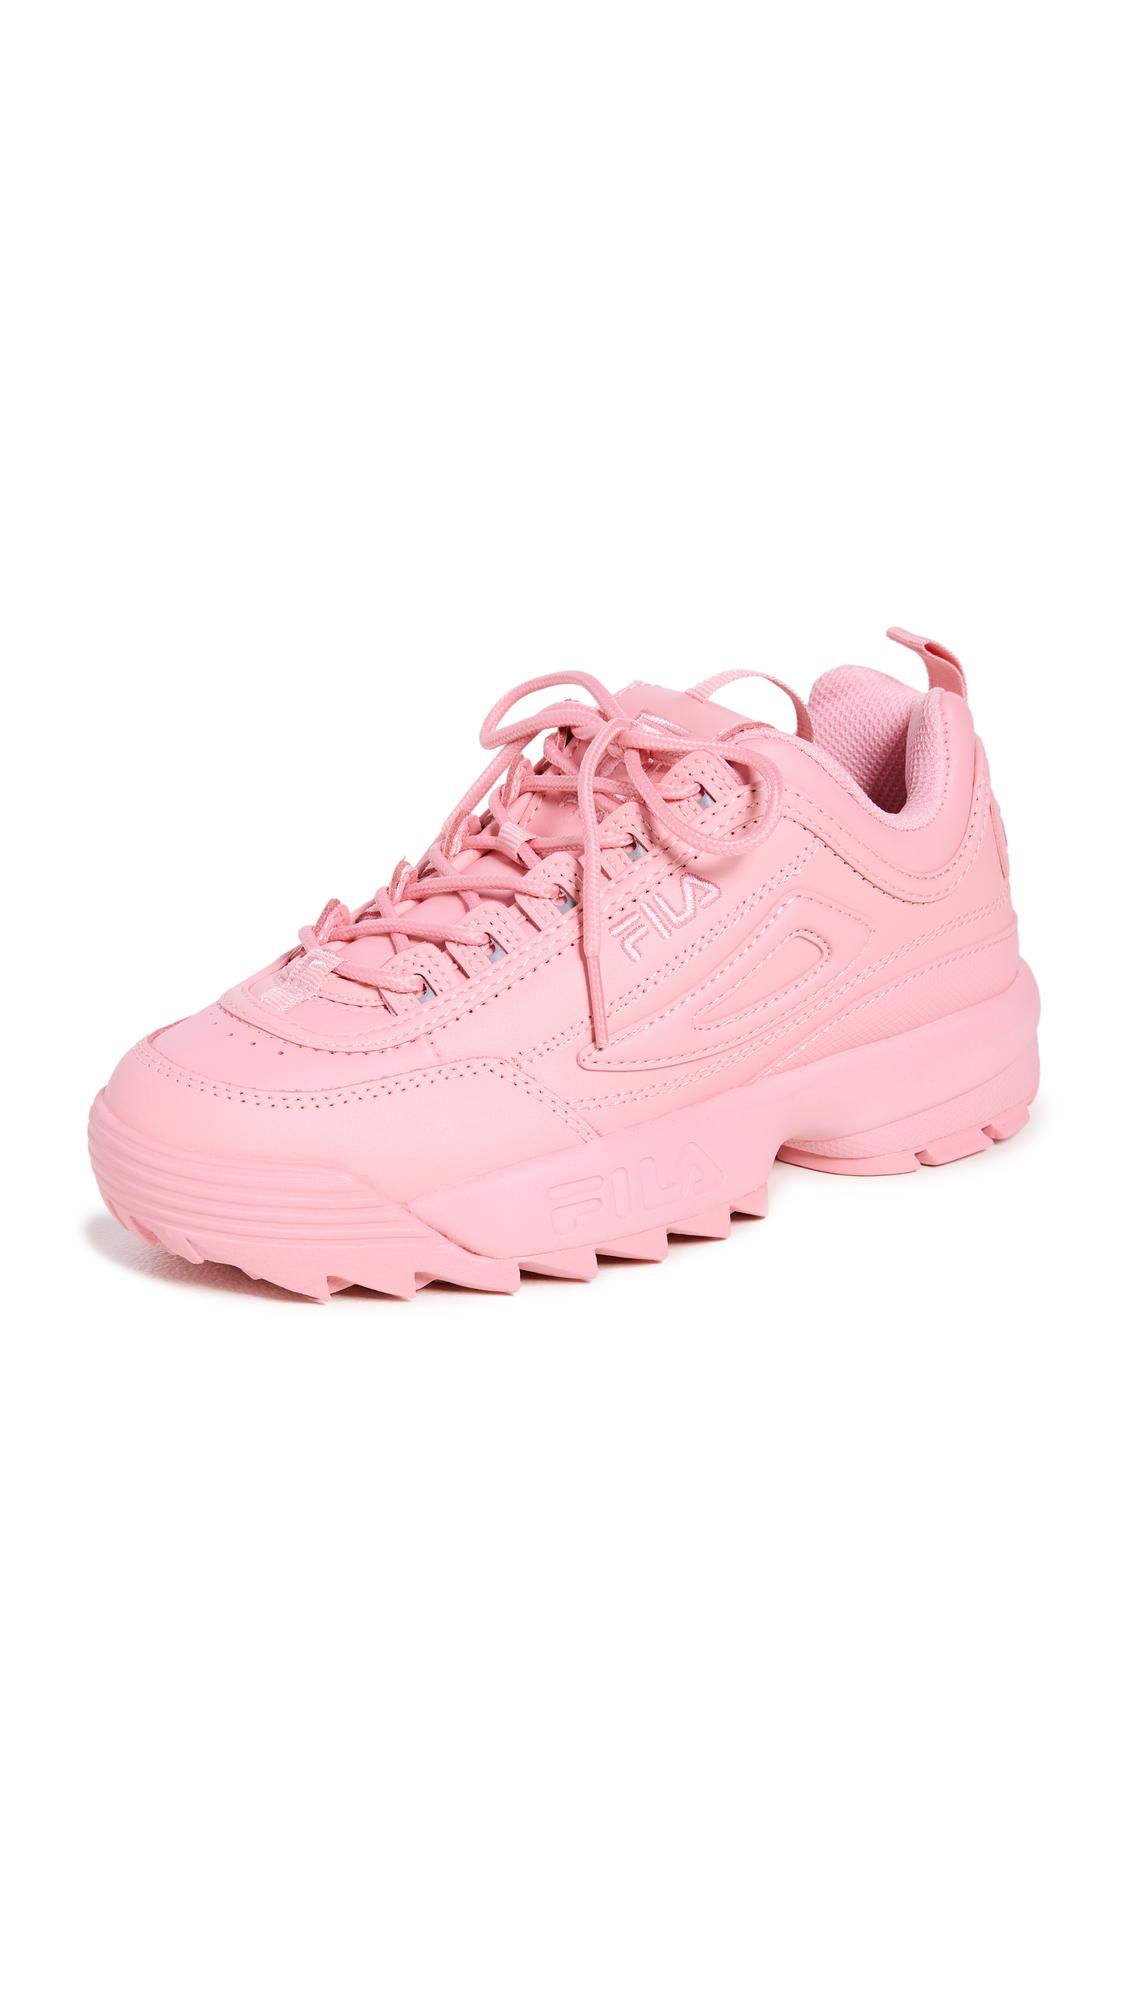 Fila Disruptor Ii Premium Sneakers in Pink | Lyst